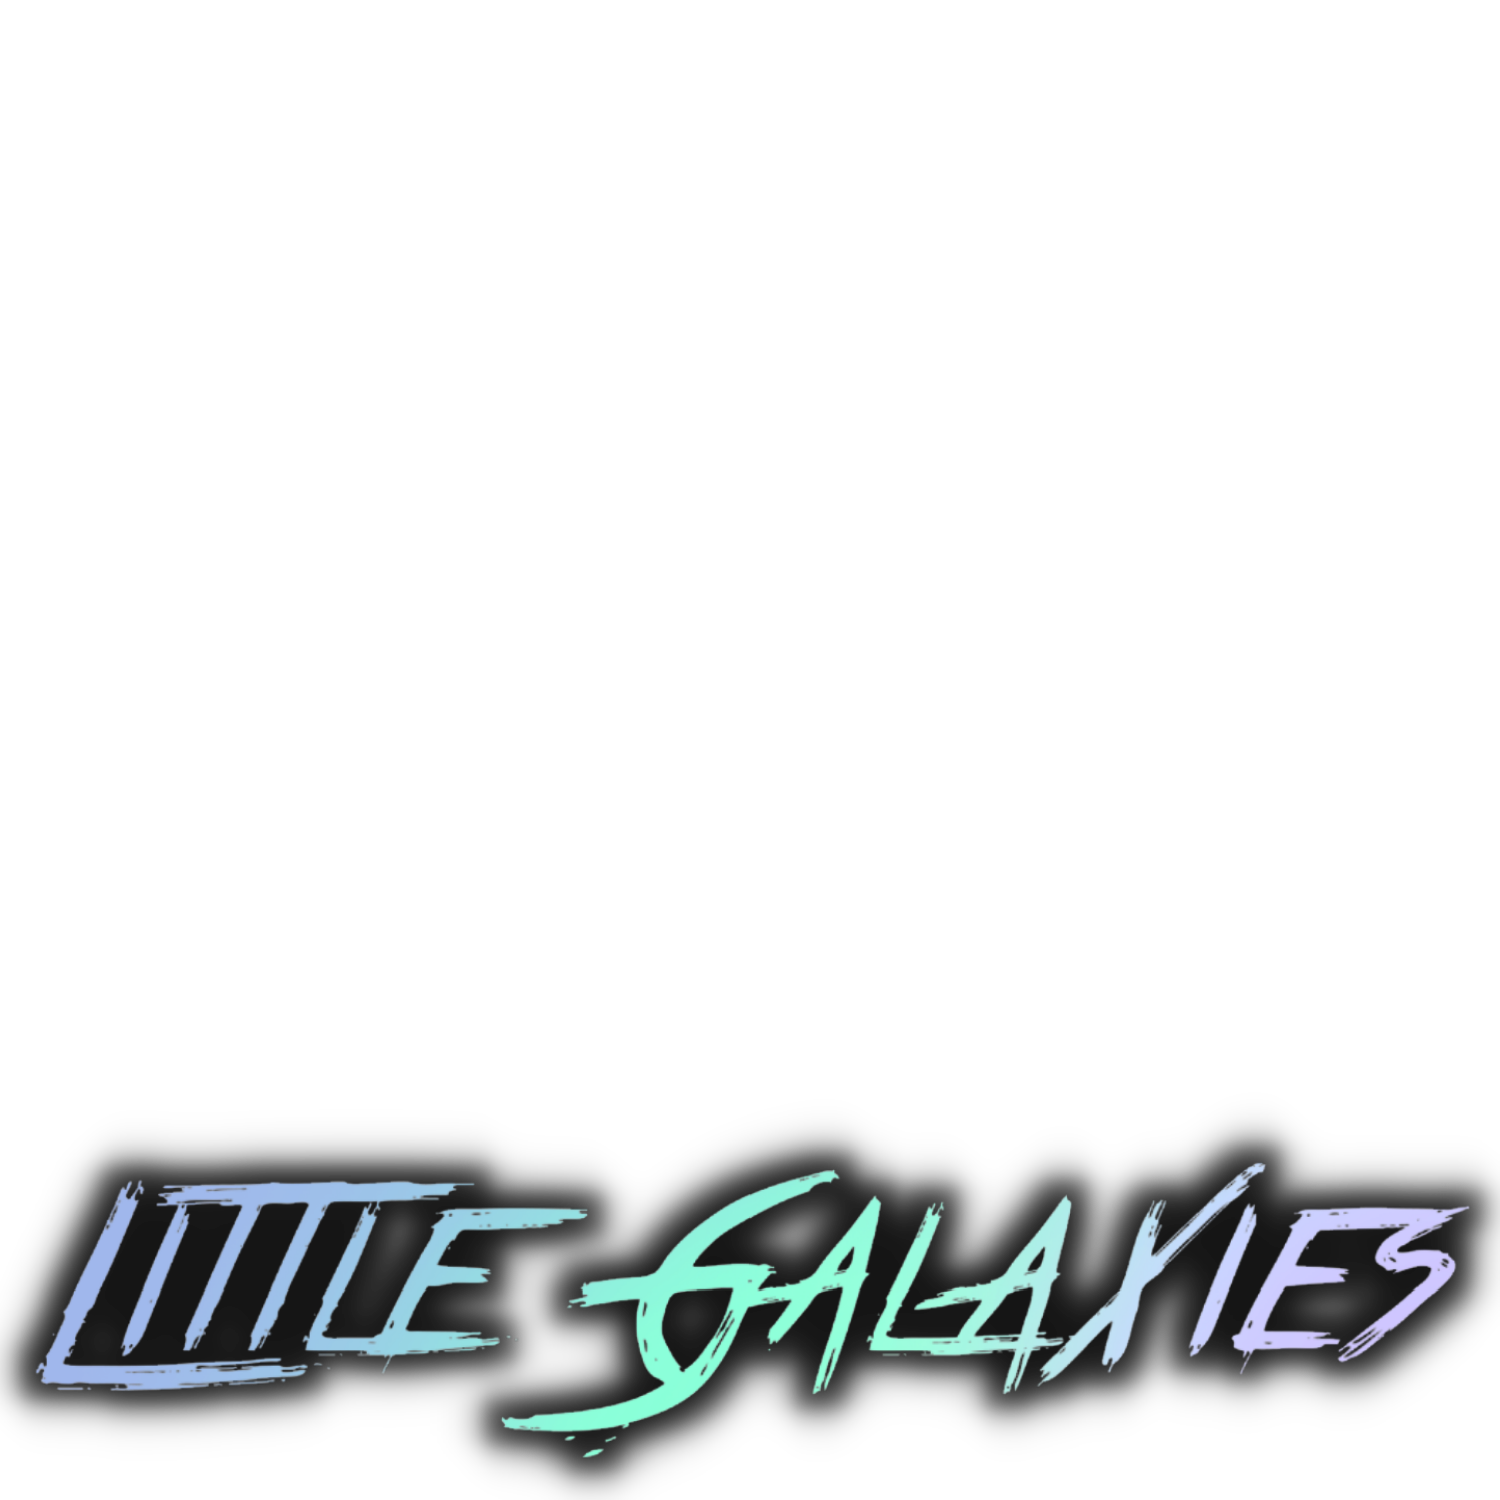 
				
				
				
				
				
				
				
				LITTLE GALAXIES
		
		
		
		
		
		
		
		